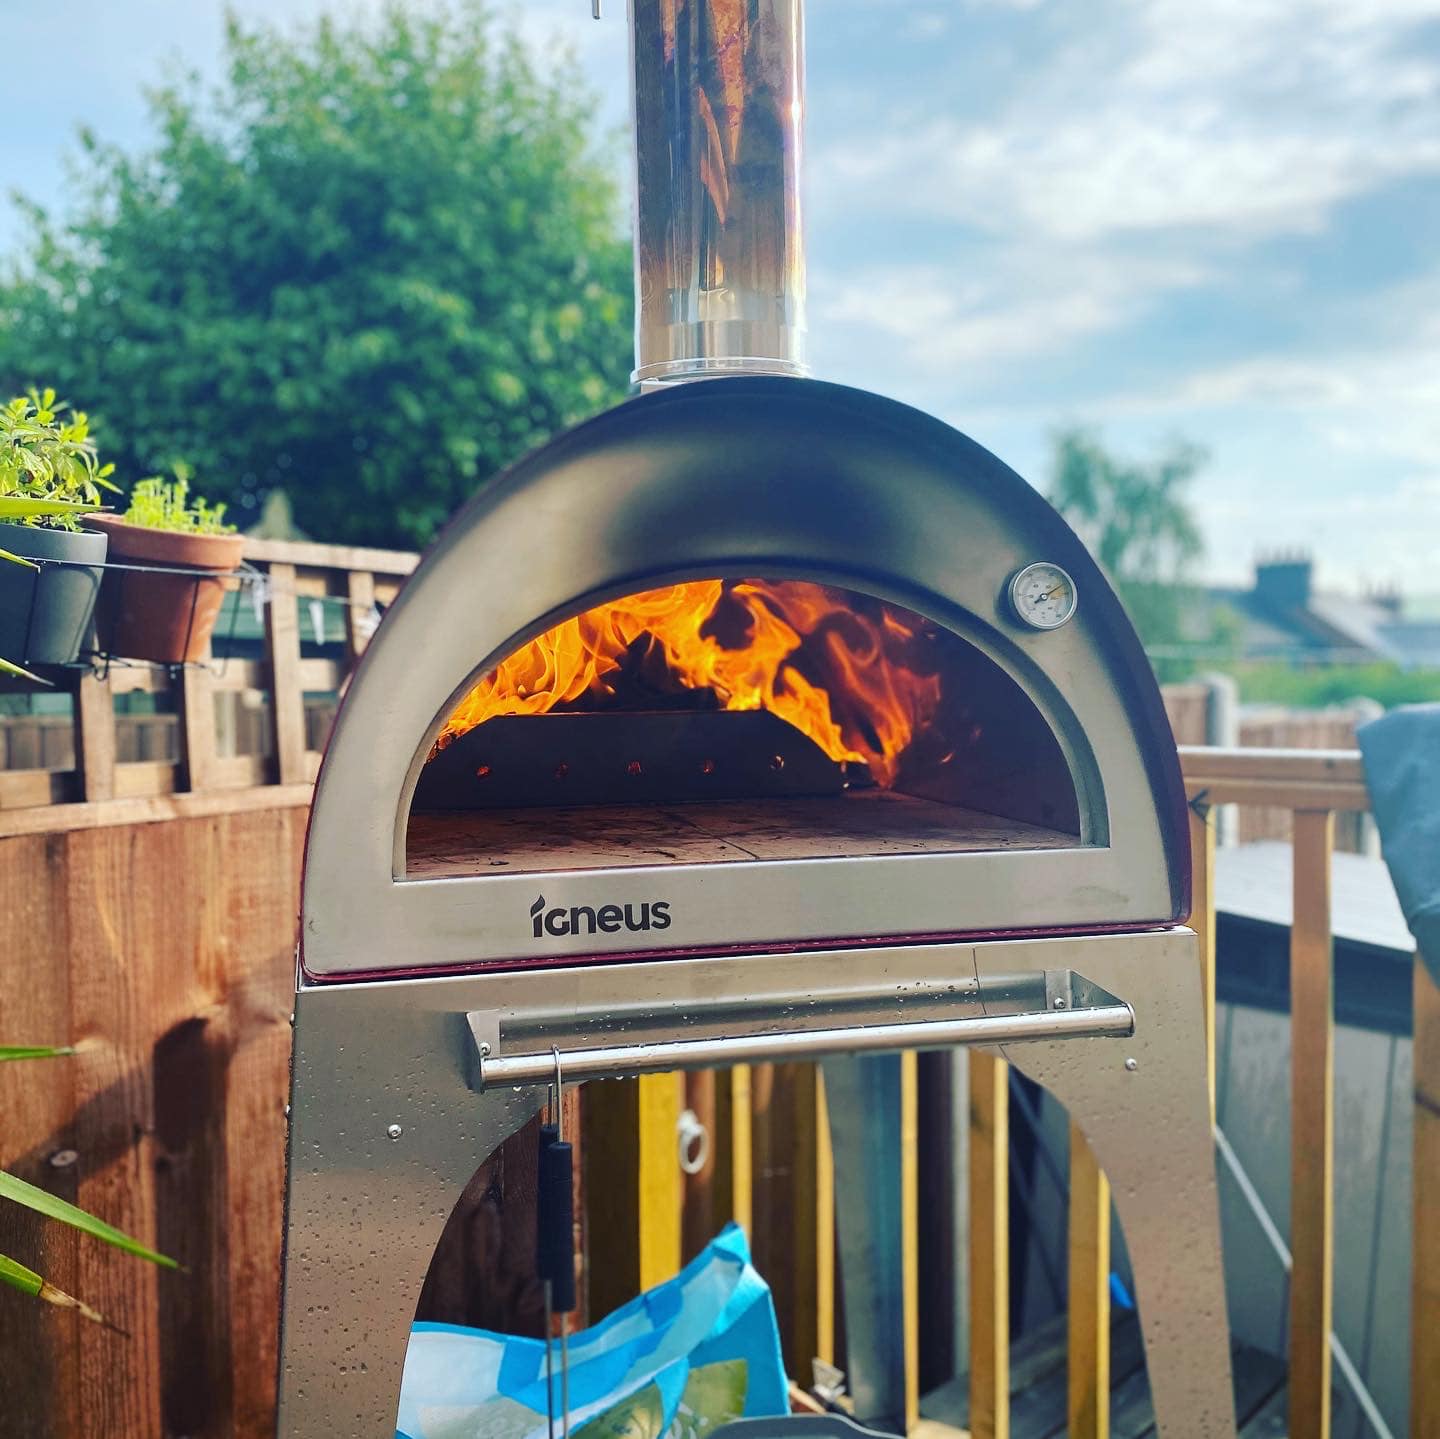 Igneus Classico pizza oven with stand